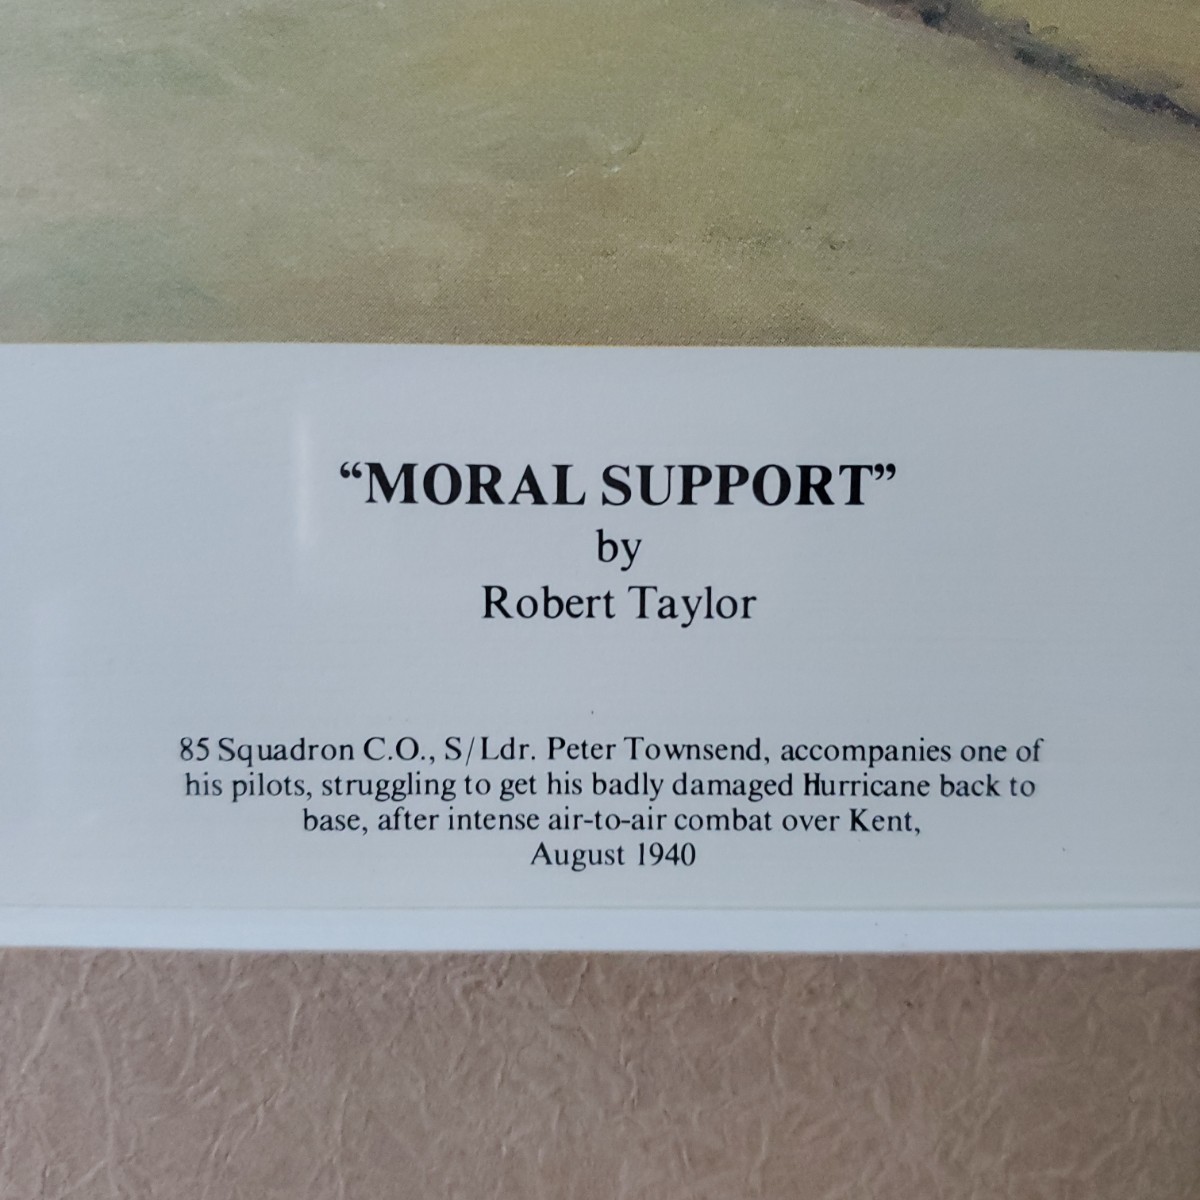 [ treasure ] aviation picture Robert * Taylor molaru* support Robert Taylor MORAL SUPPORT